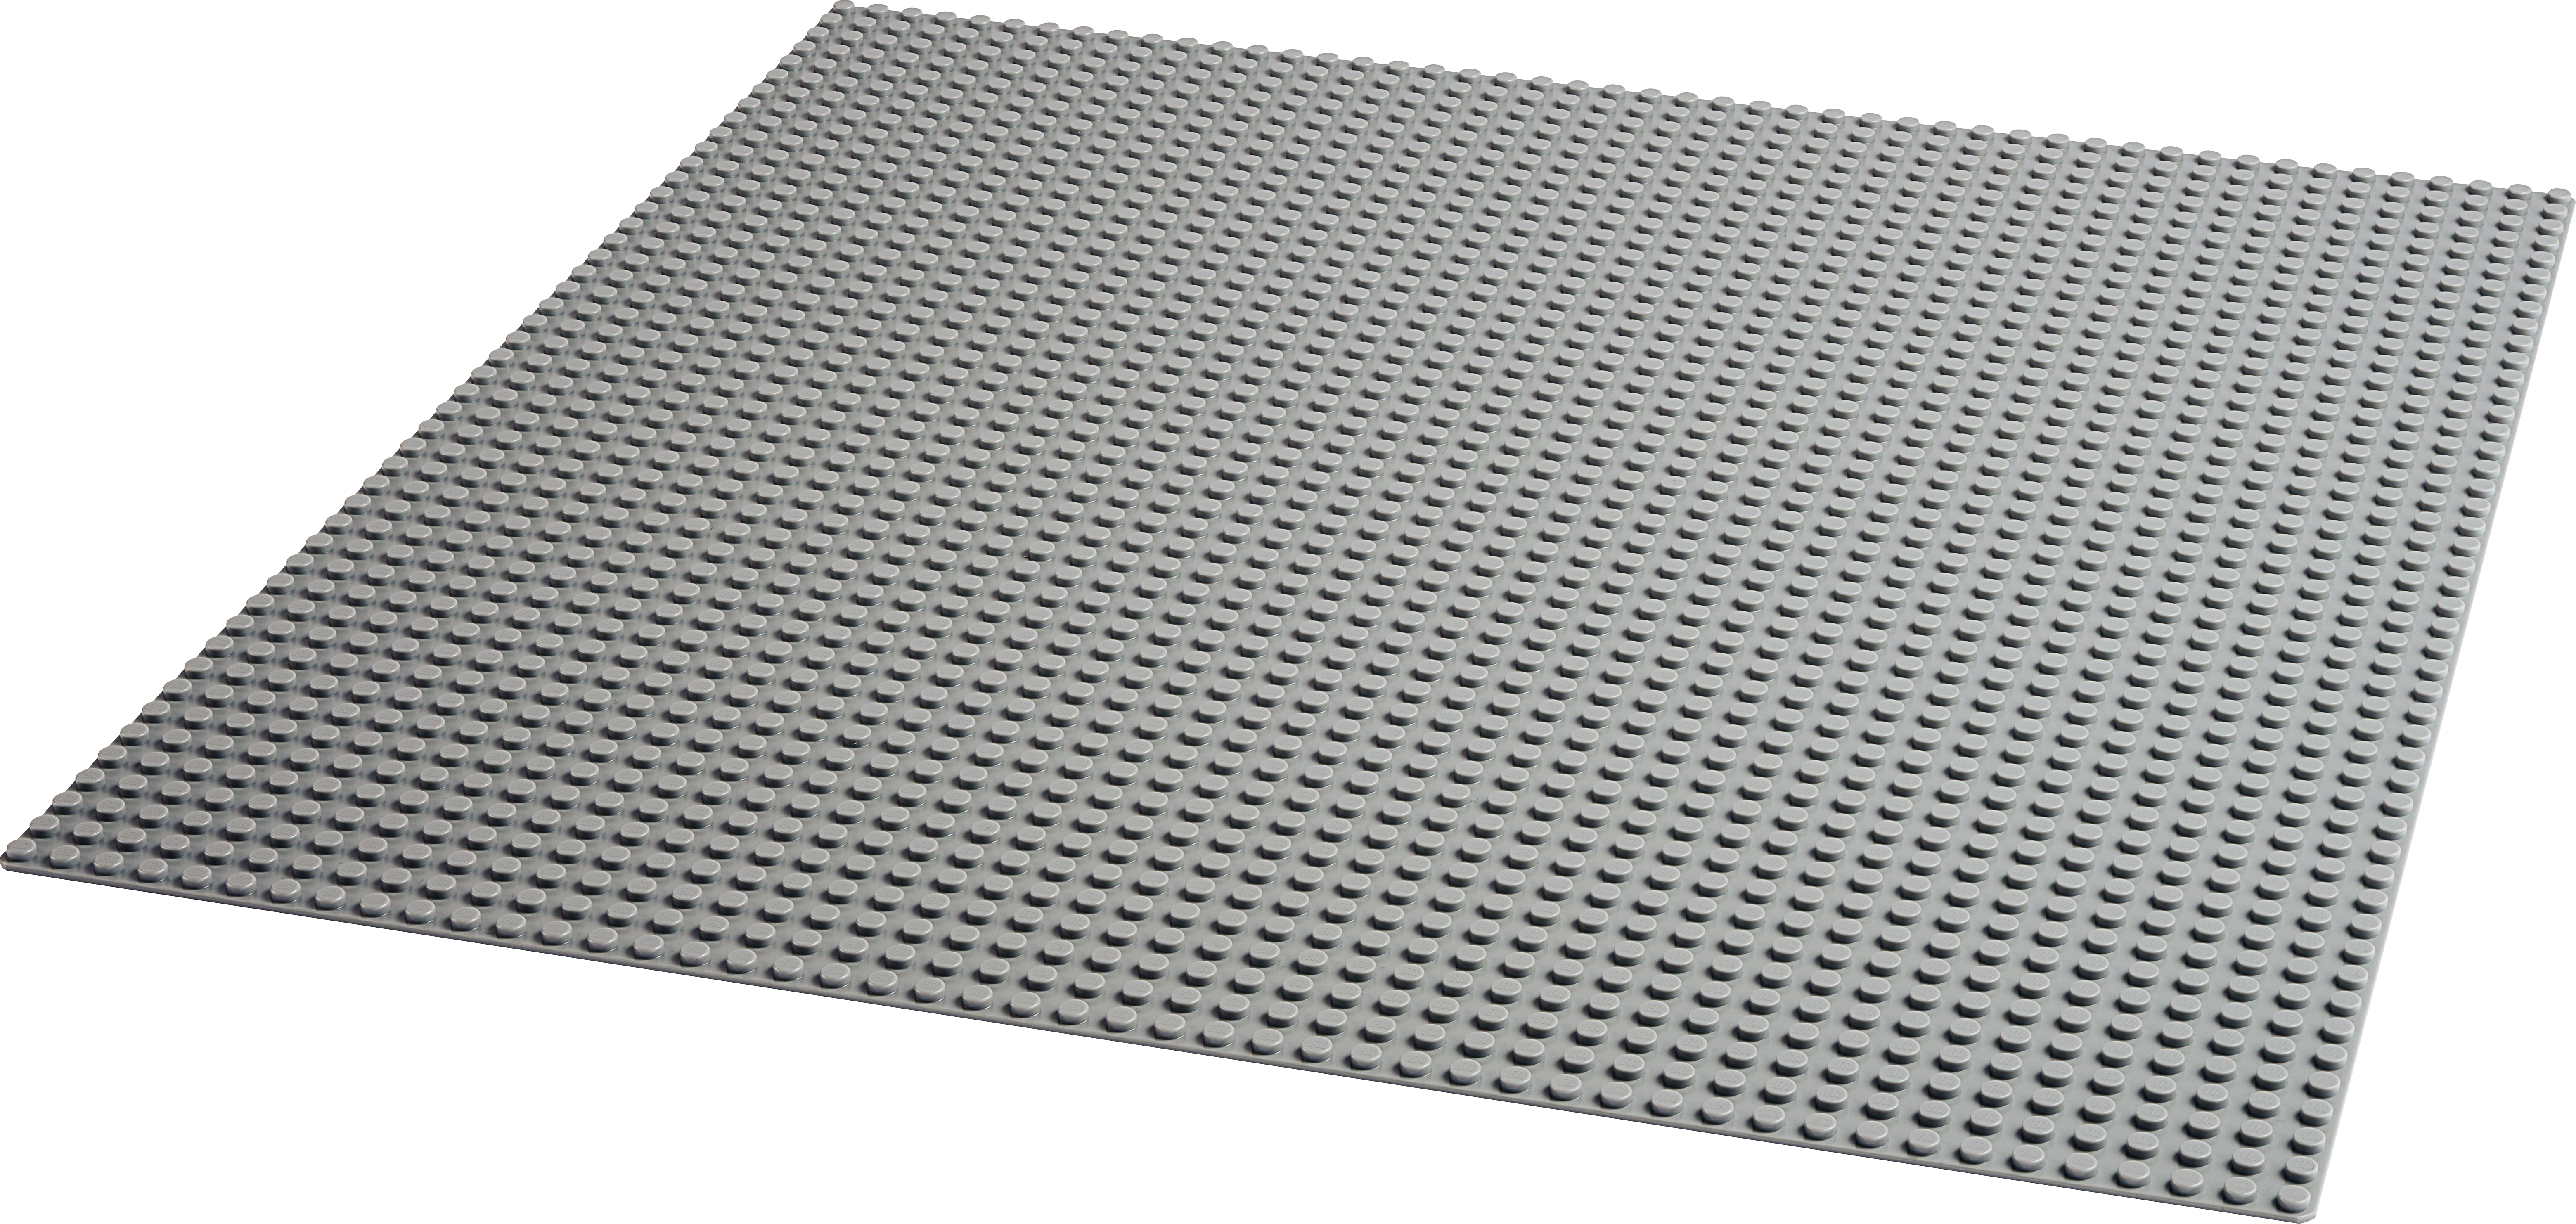 LEGO Classic - Grå basplatta (11024)